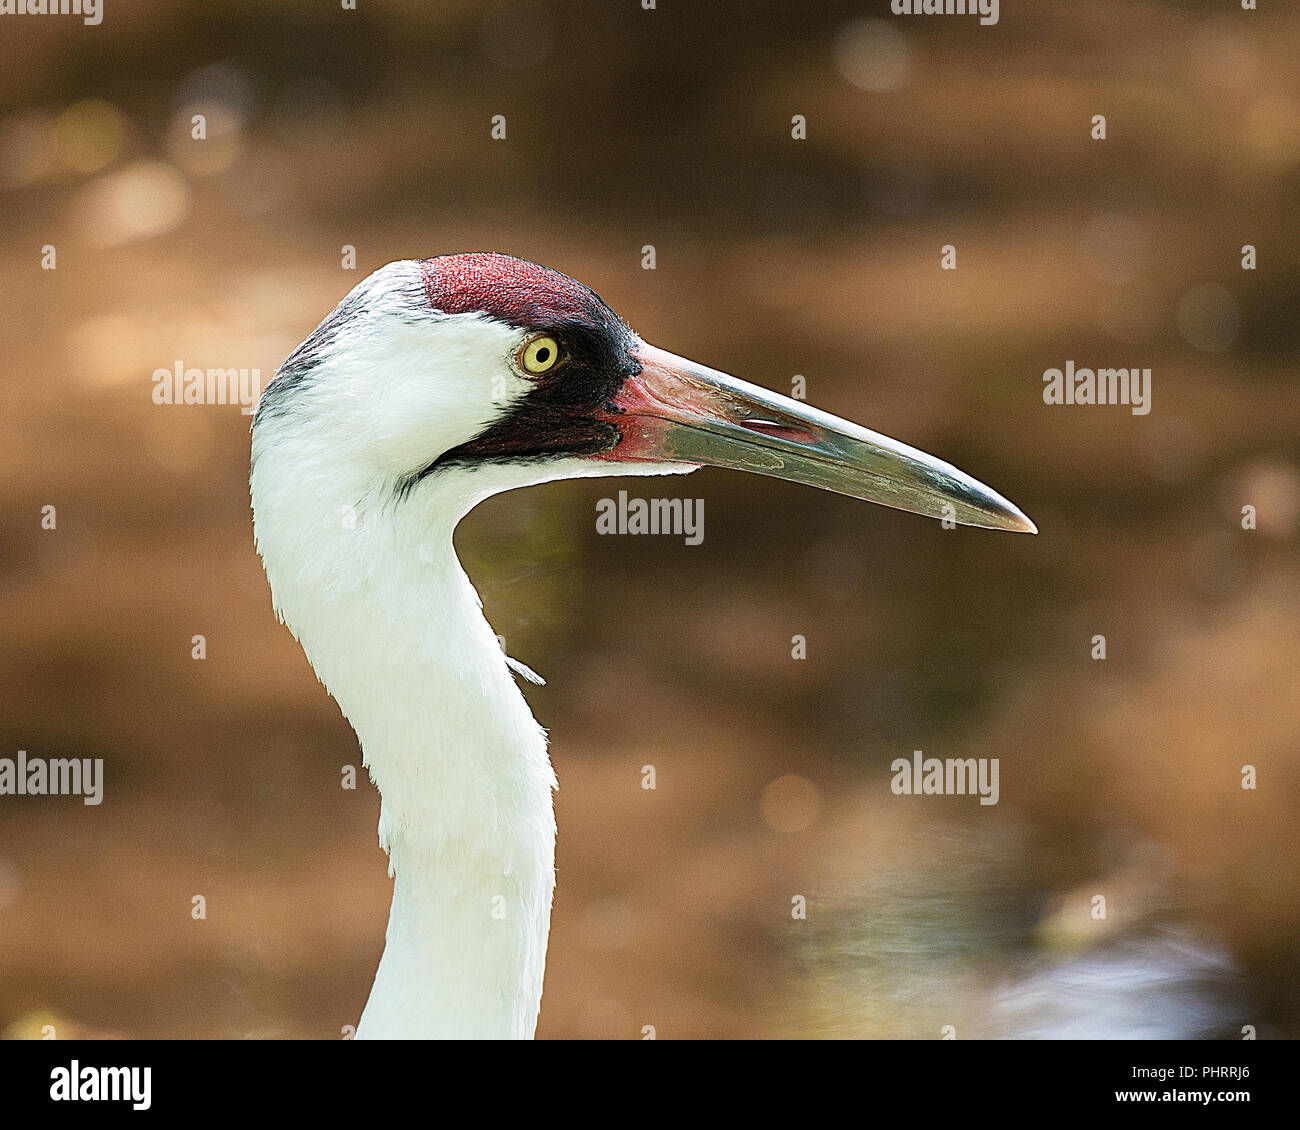 Whooping Crane bird close up enjoying its surrounding. Stock Photo